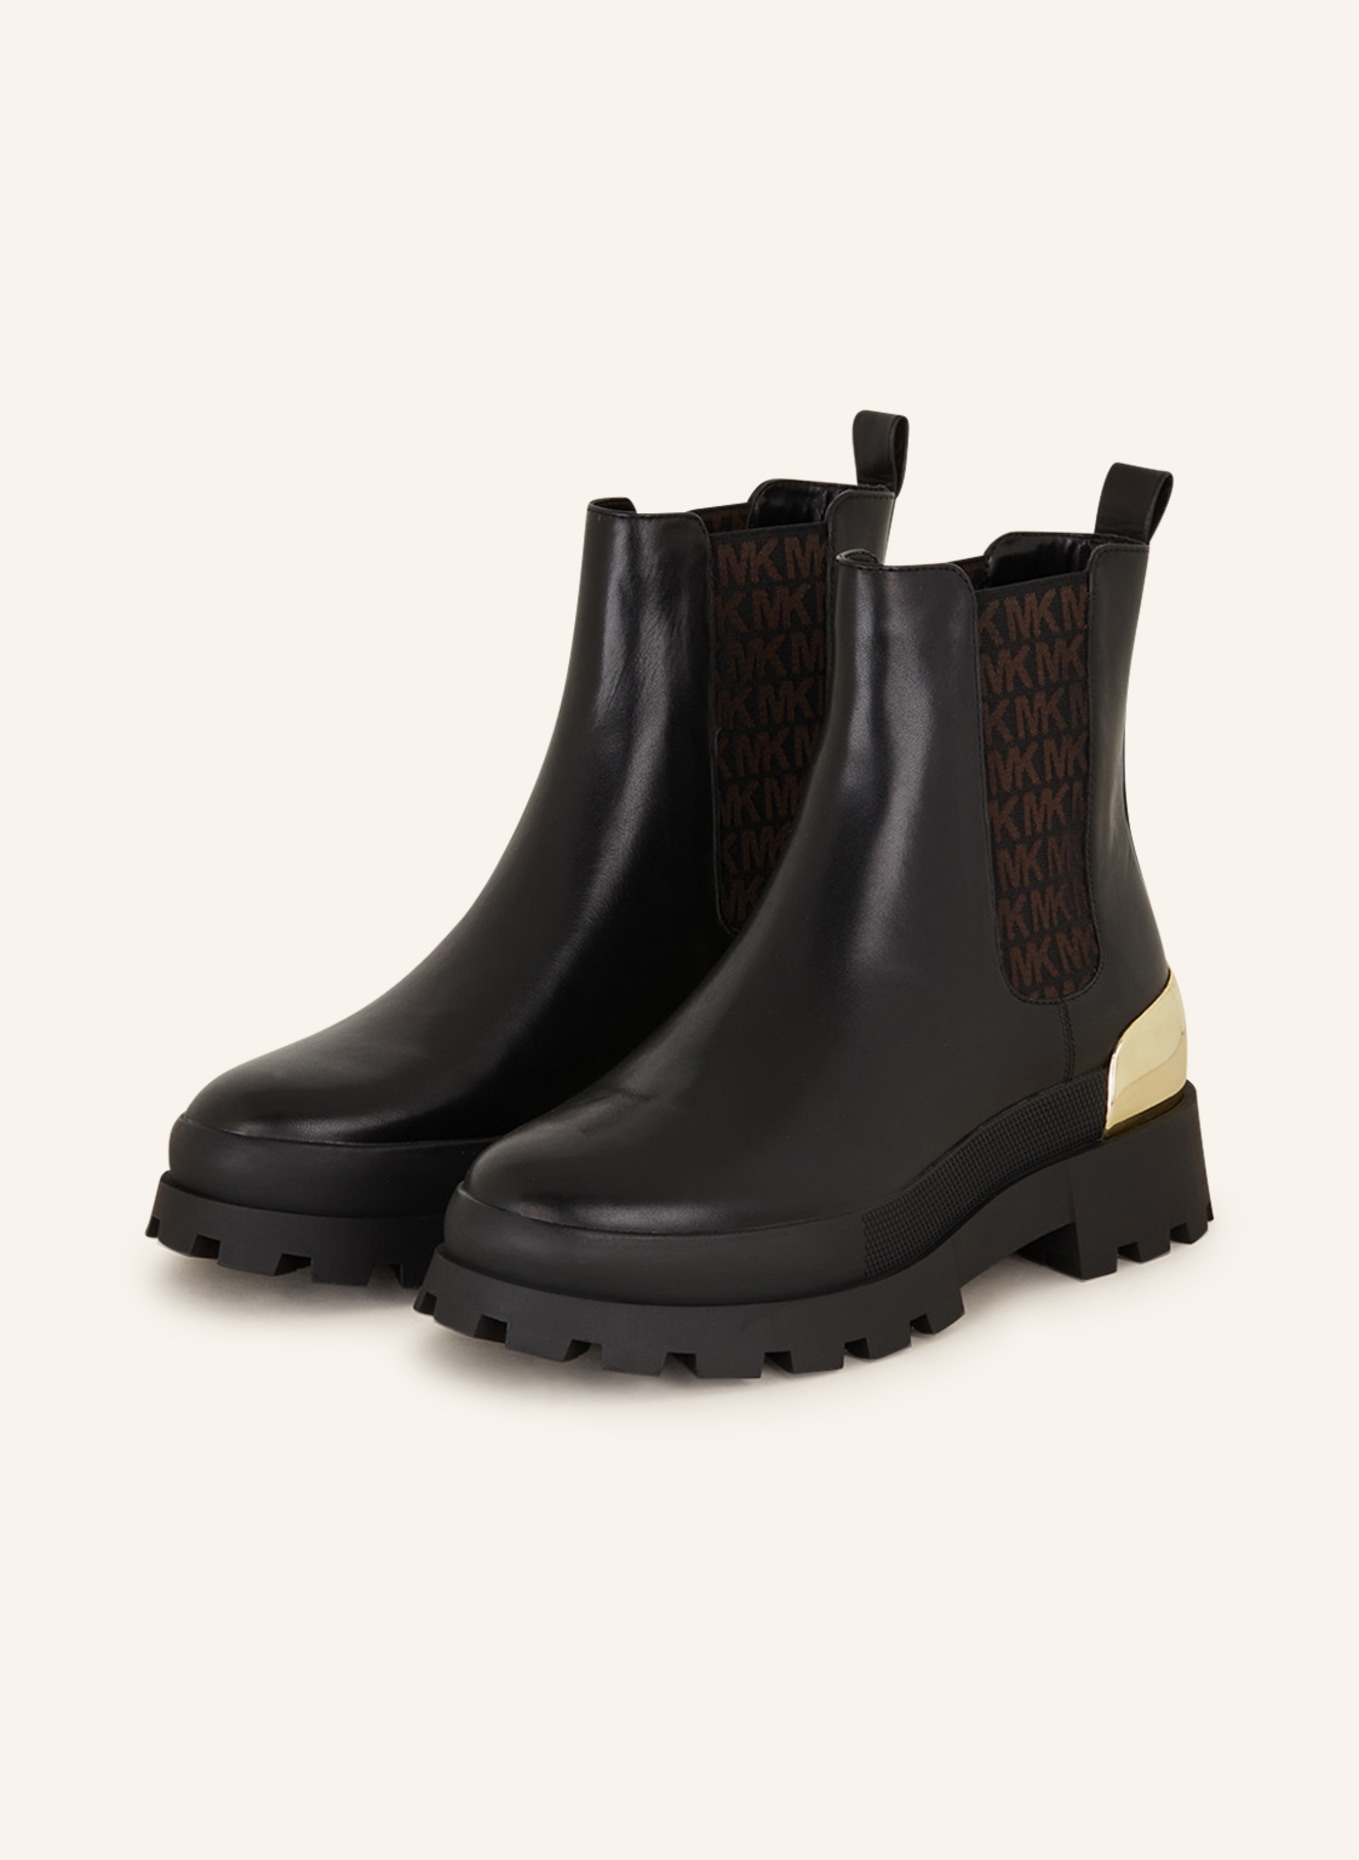 MICHAEL KORS Chelsea-Boots ROWAN, Farbe: 001 BLACK (Bild 1)